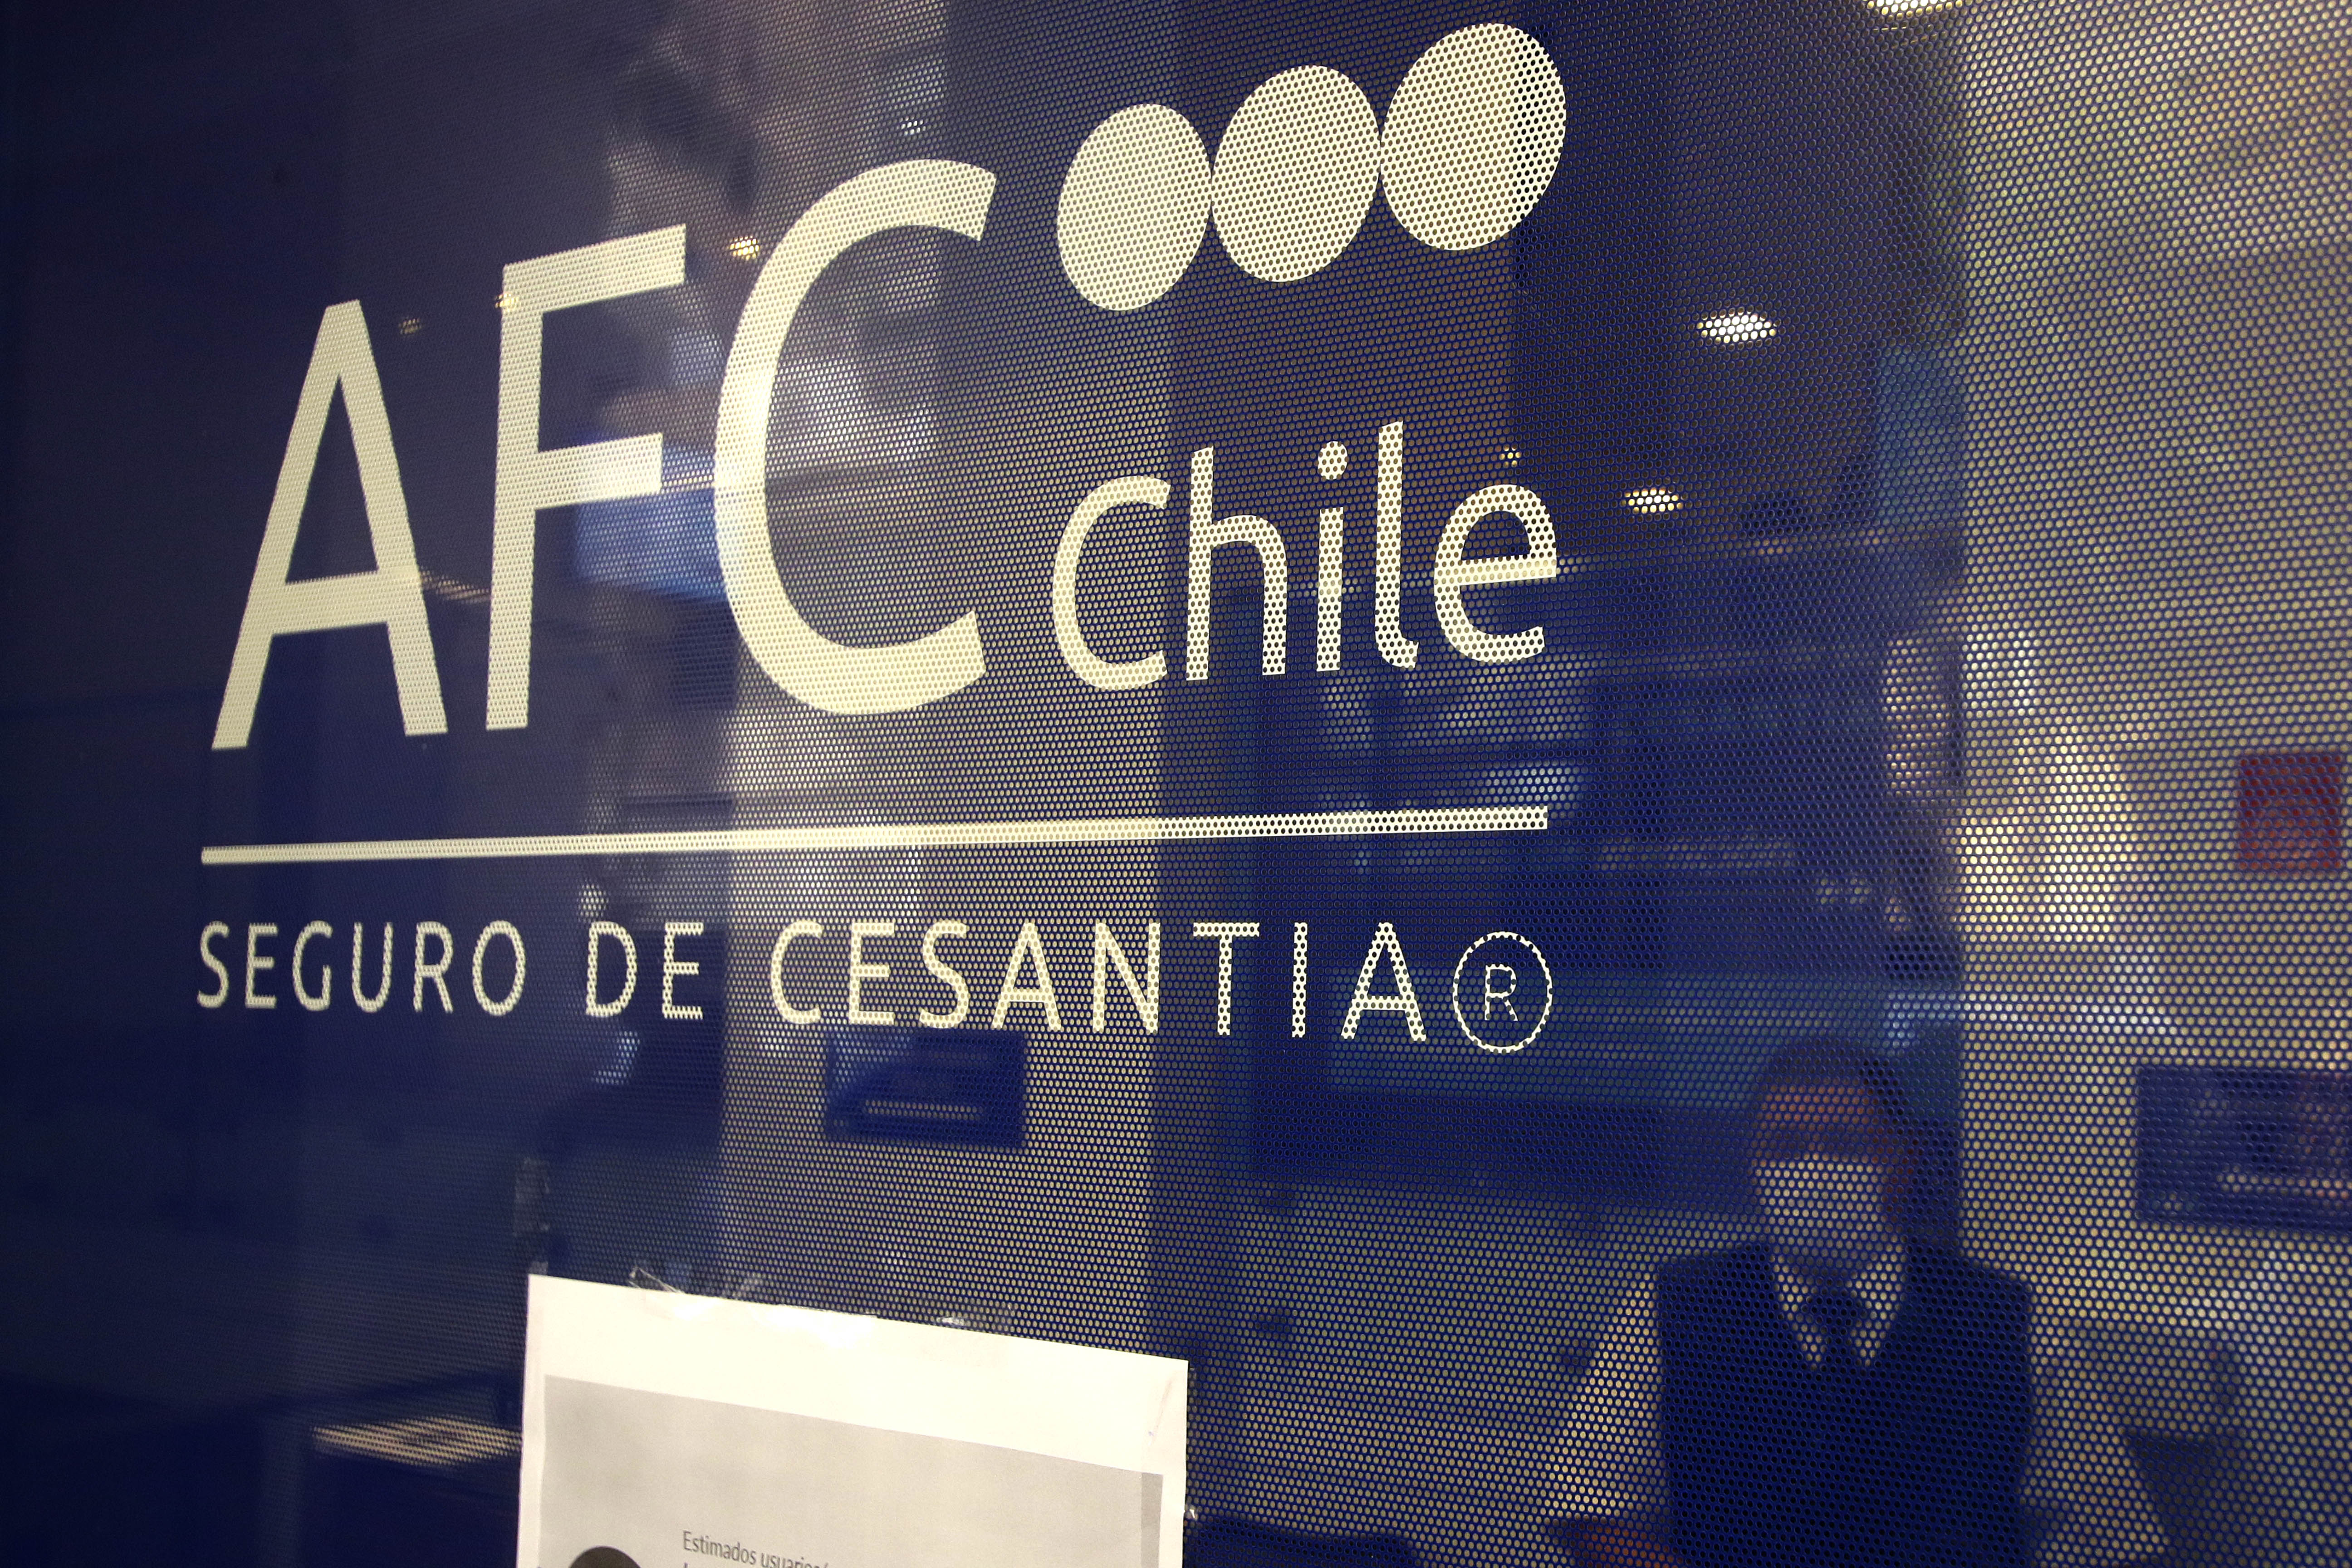 AFC Chile